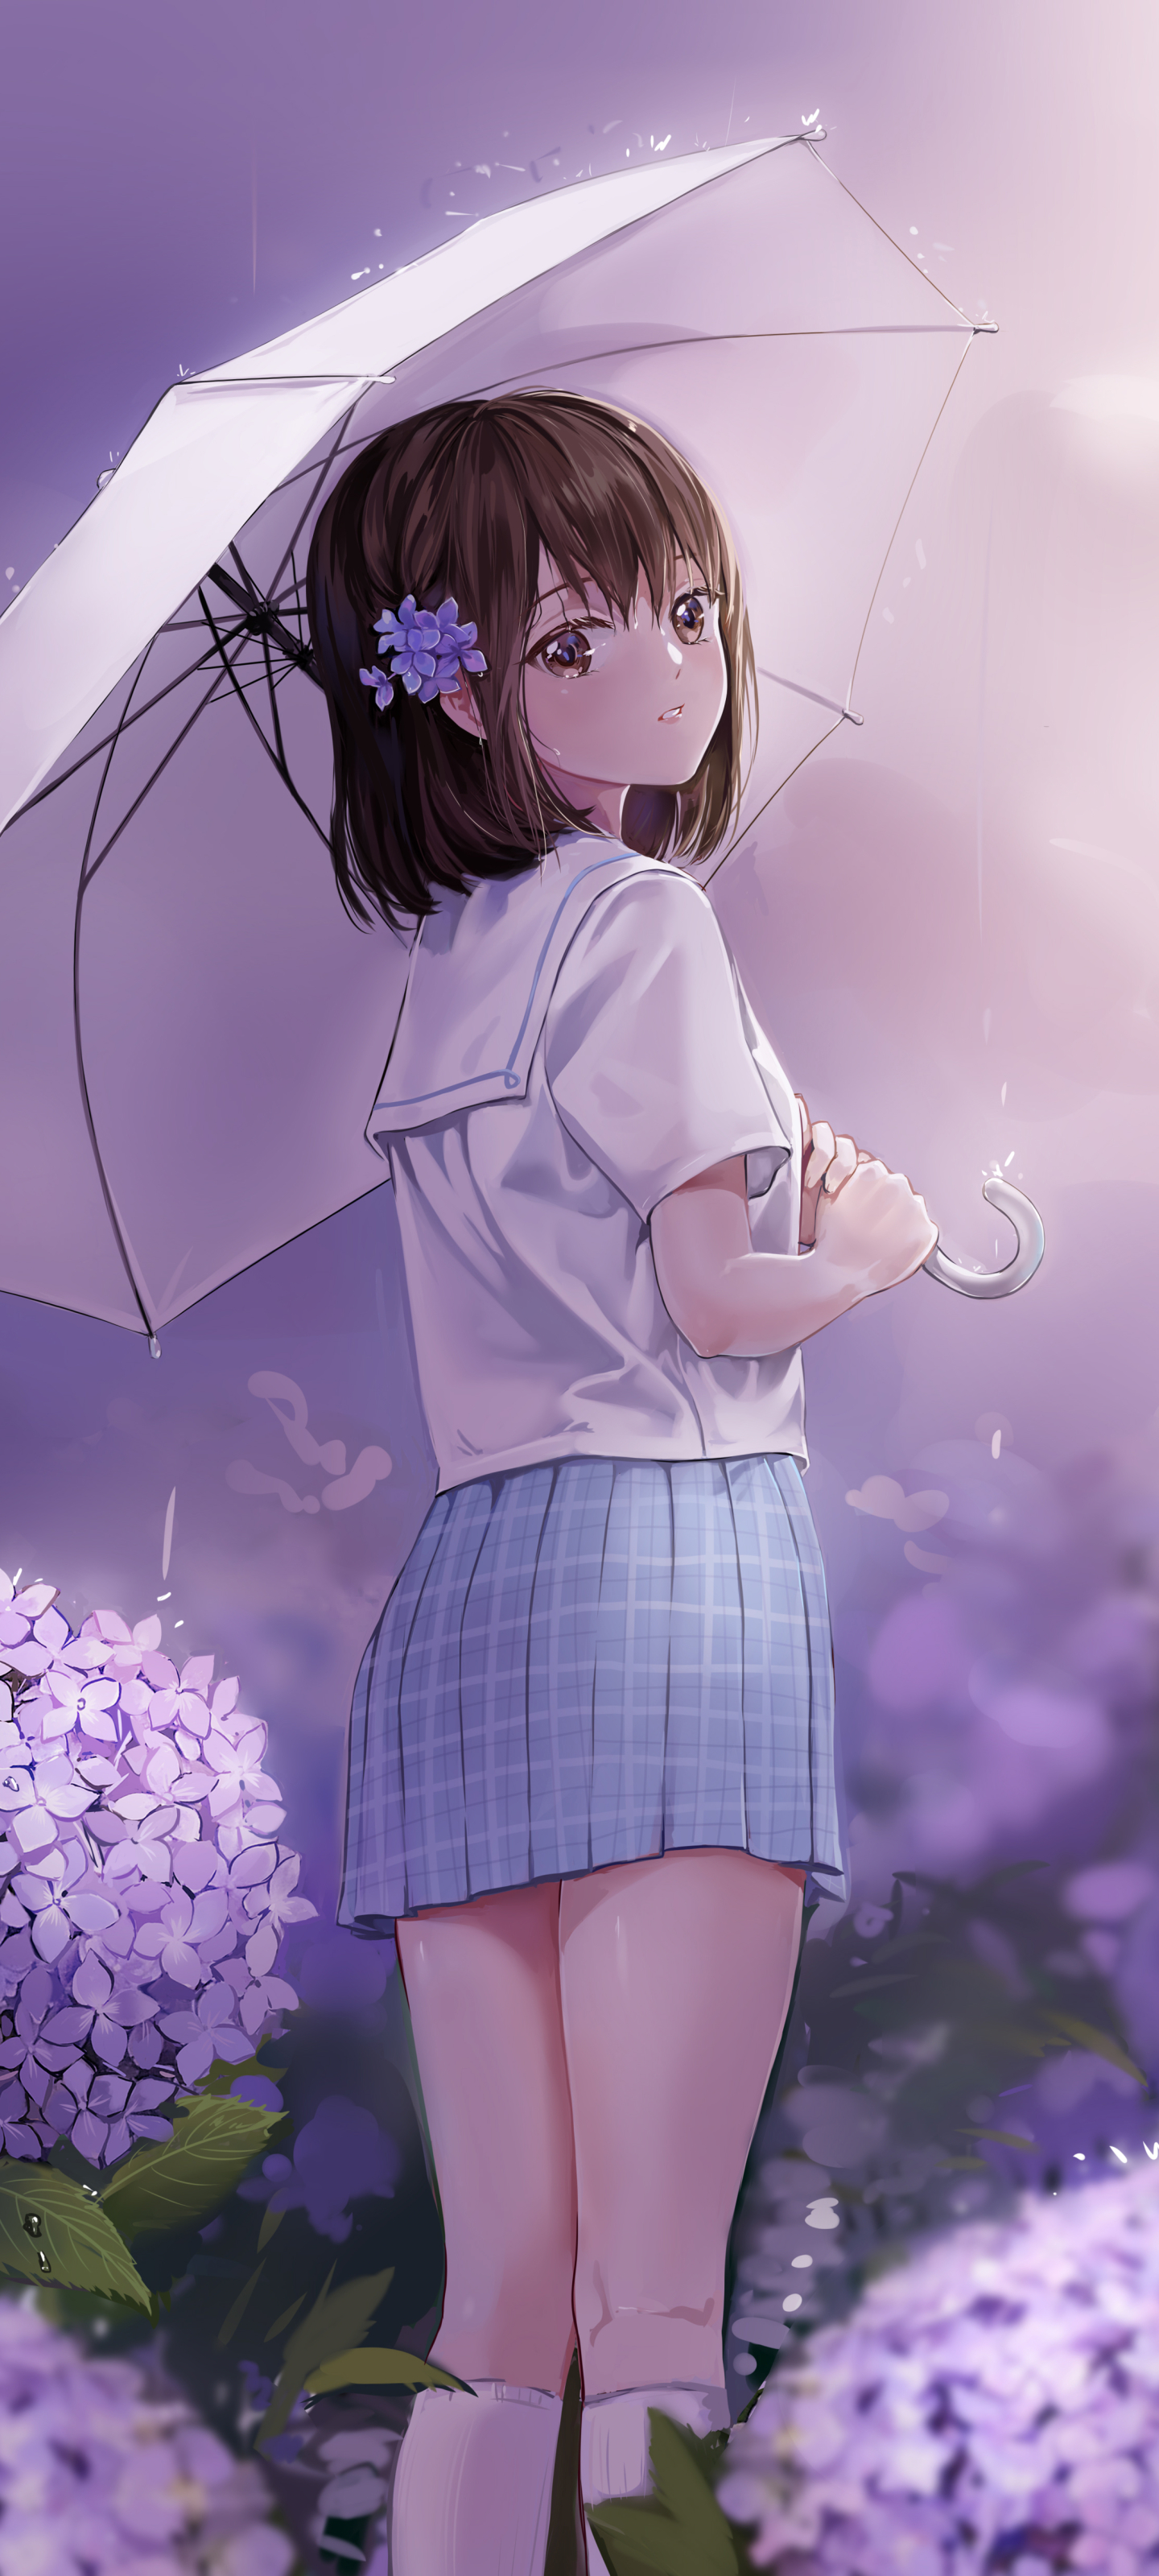 Download Anime Kawaii Cute Girl Wallpaper | Wallpapers.com